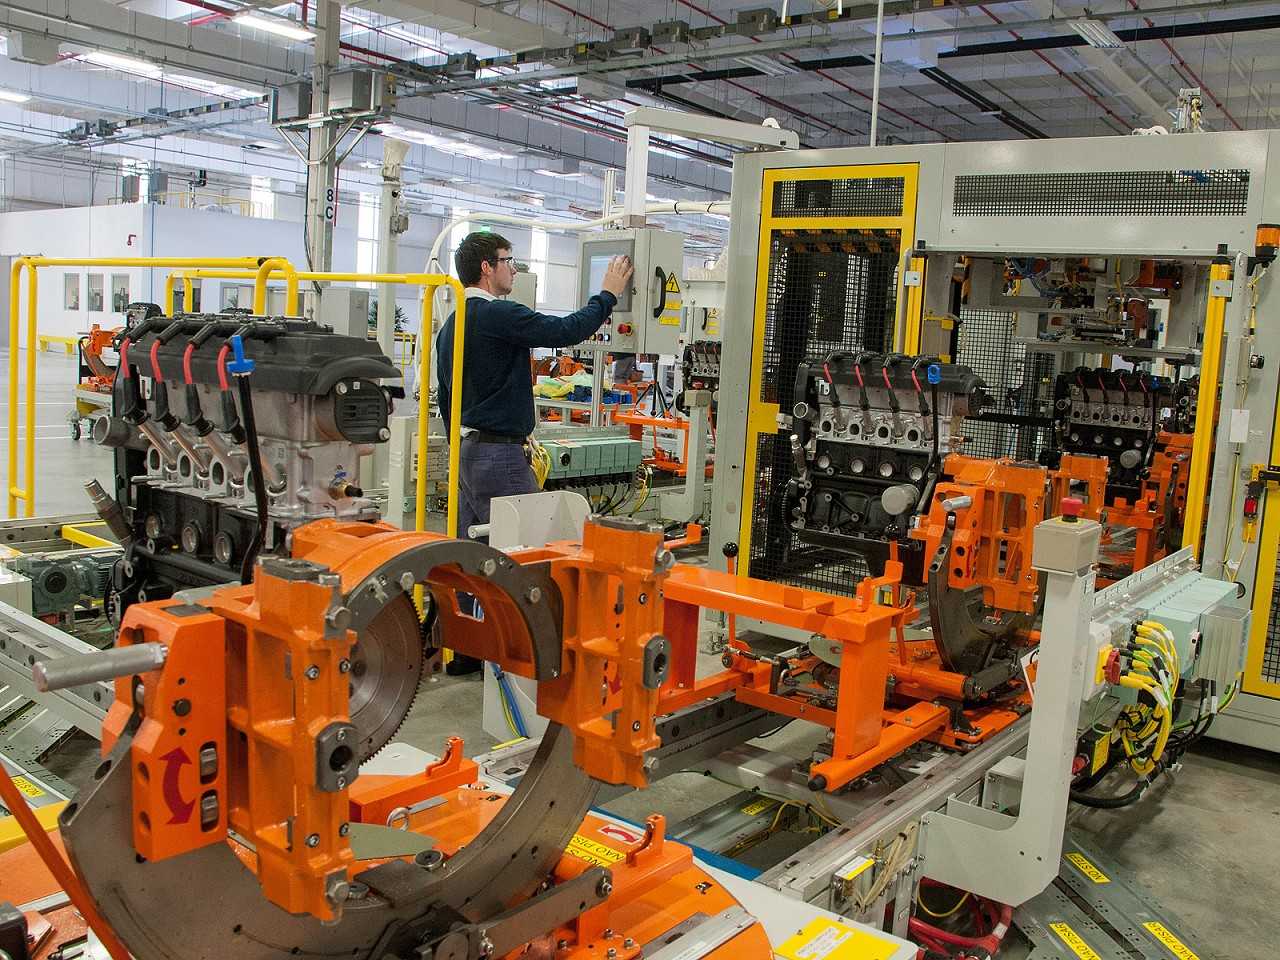 Fbrica de motores da GM em Joinville, Santa Catarina